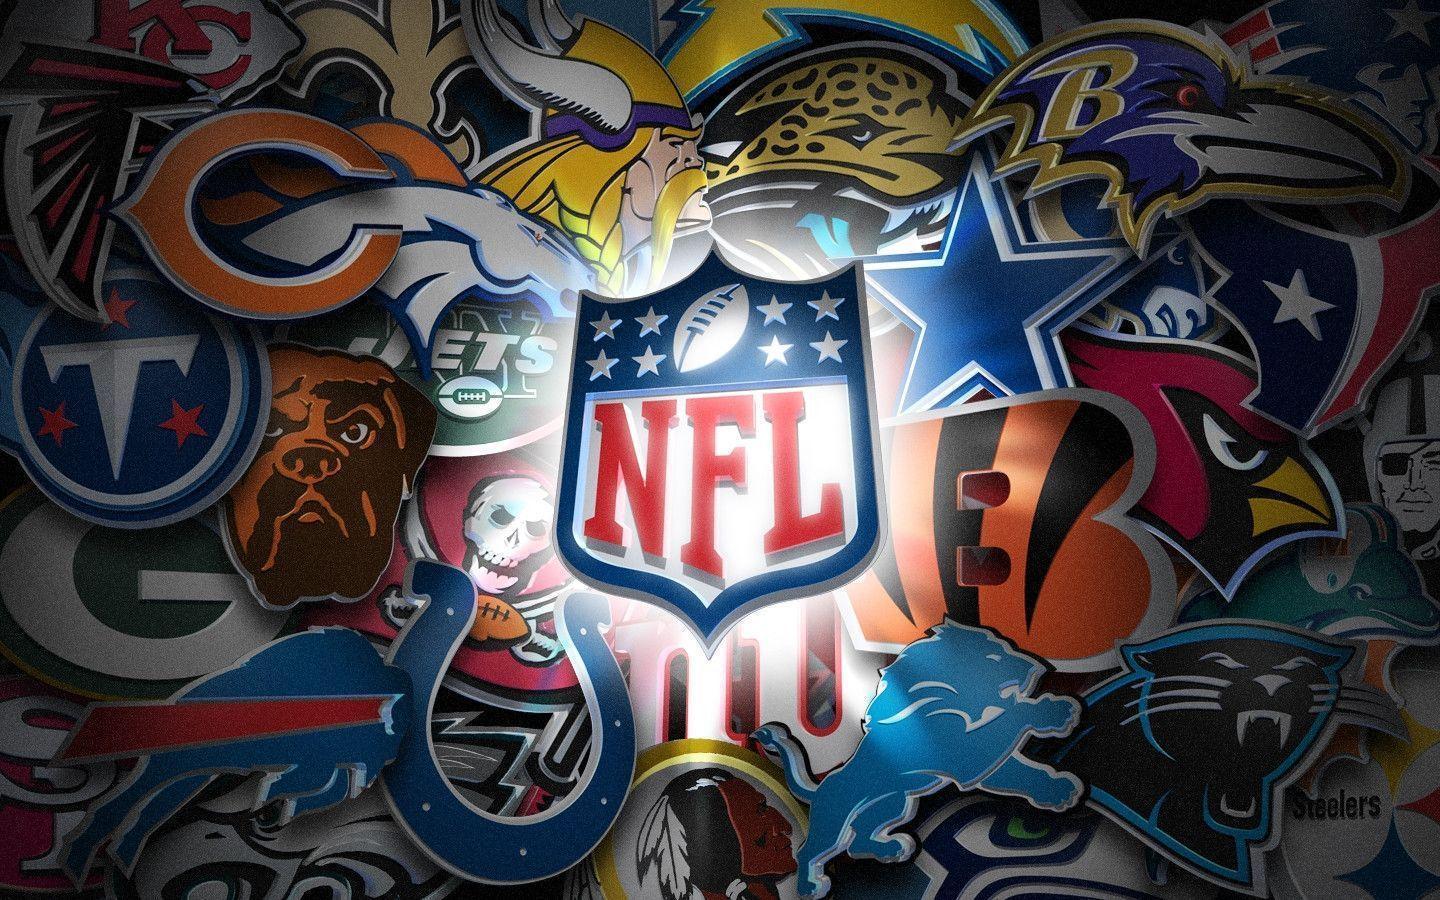 List of NFL Teams in Alphabetical Order